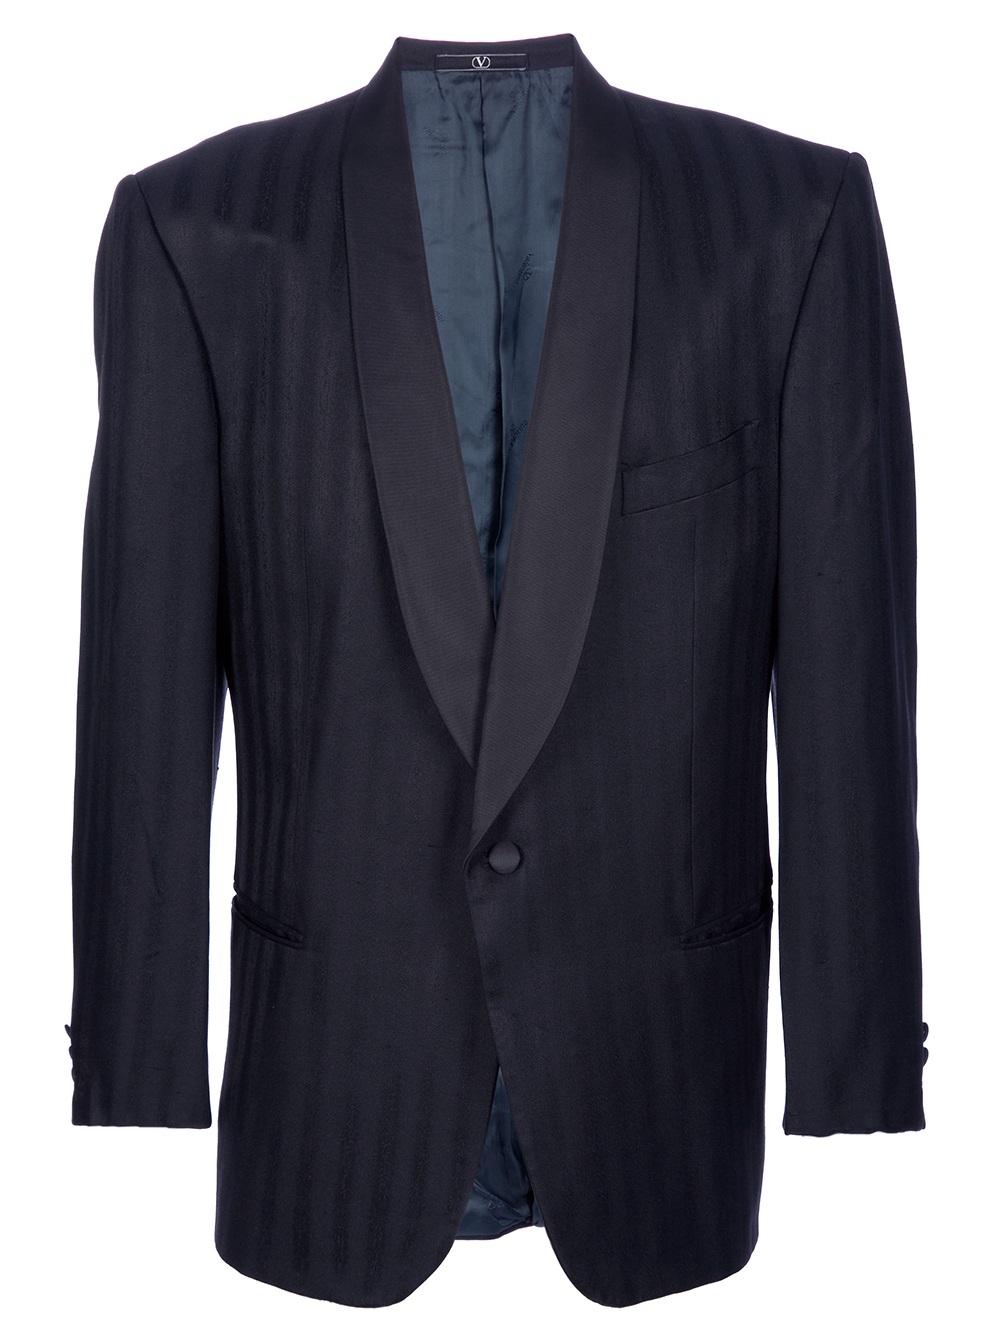 Valentino Silk Tuxedo Jacket in Midnight (Blue) for Men - Lyst